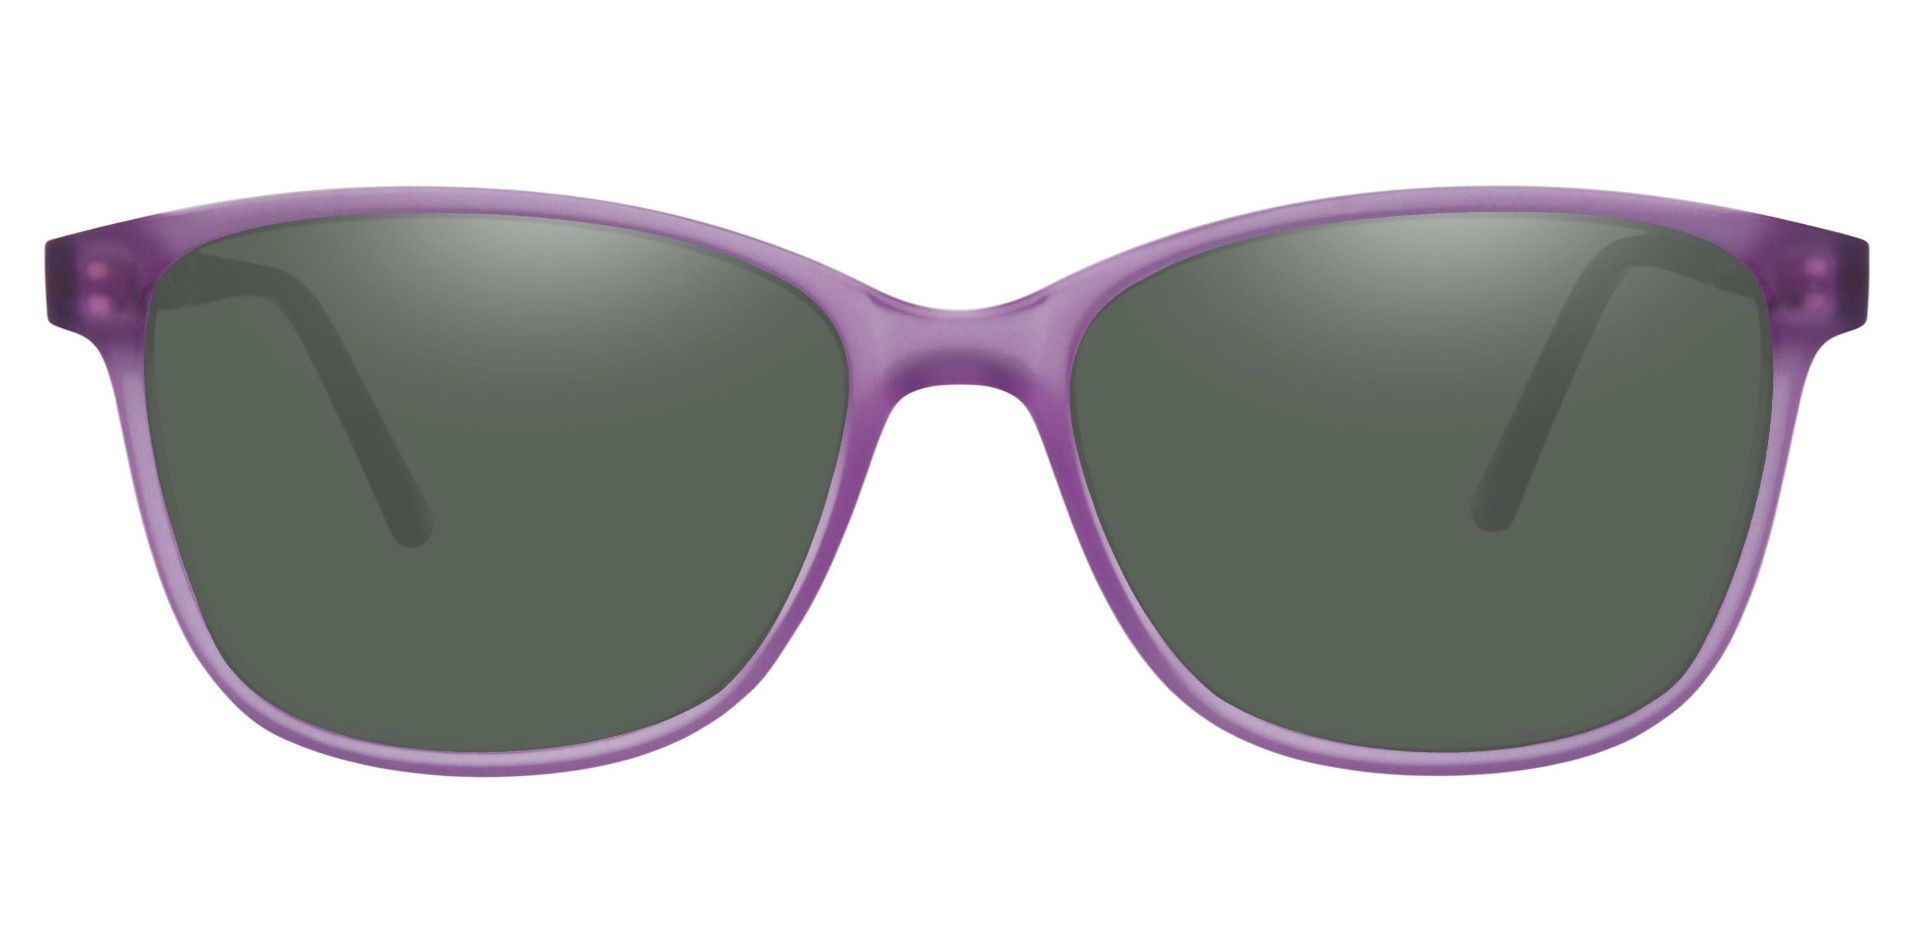 Argyle Rectangle Prescription Sunglasses - Purple Frame With Green Lenses